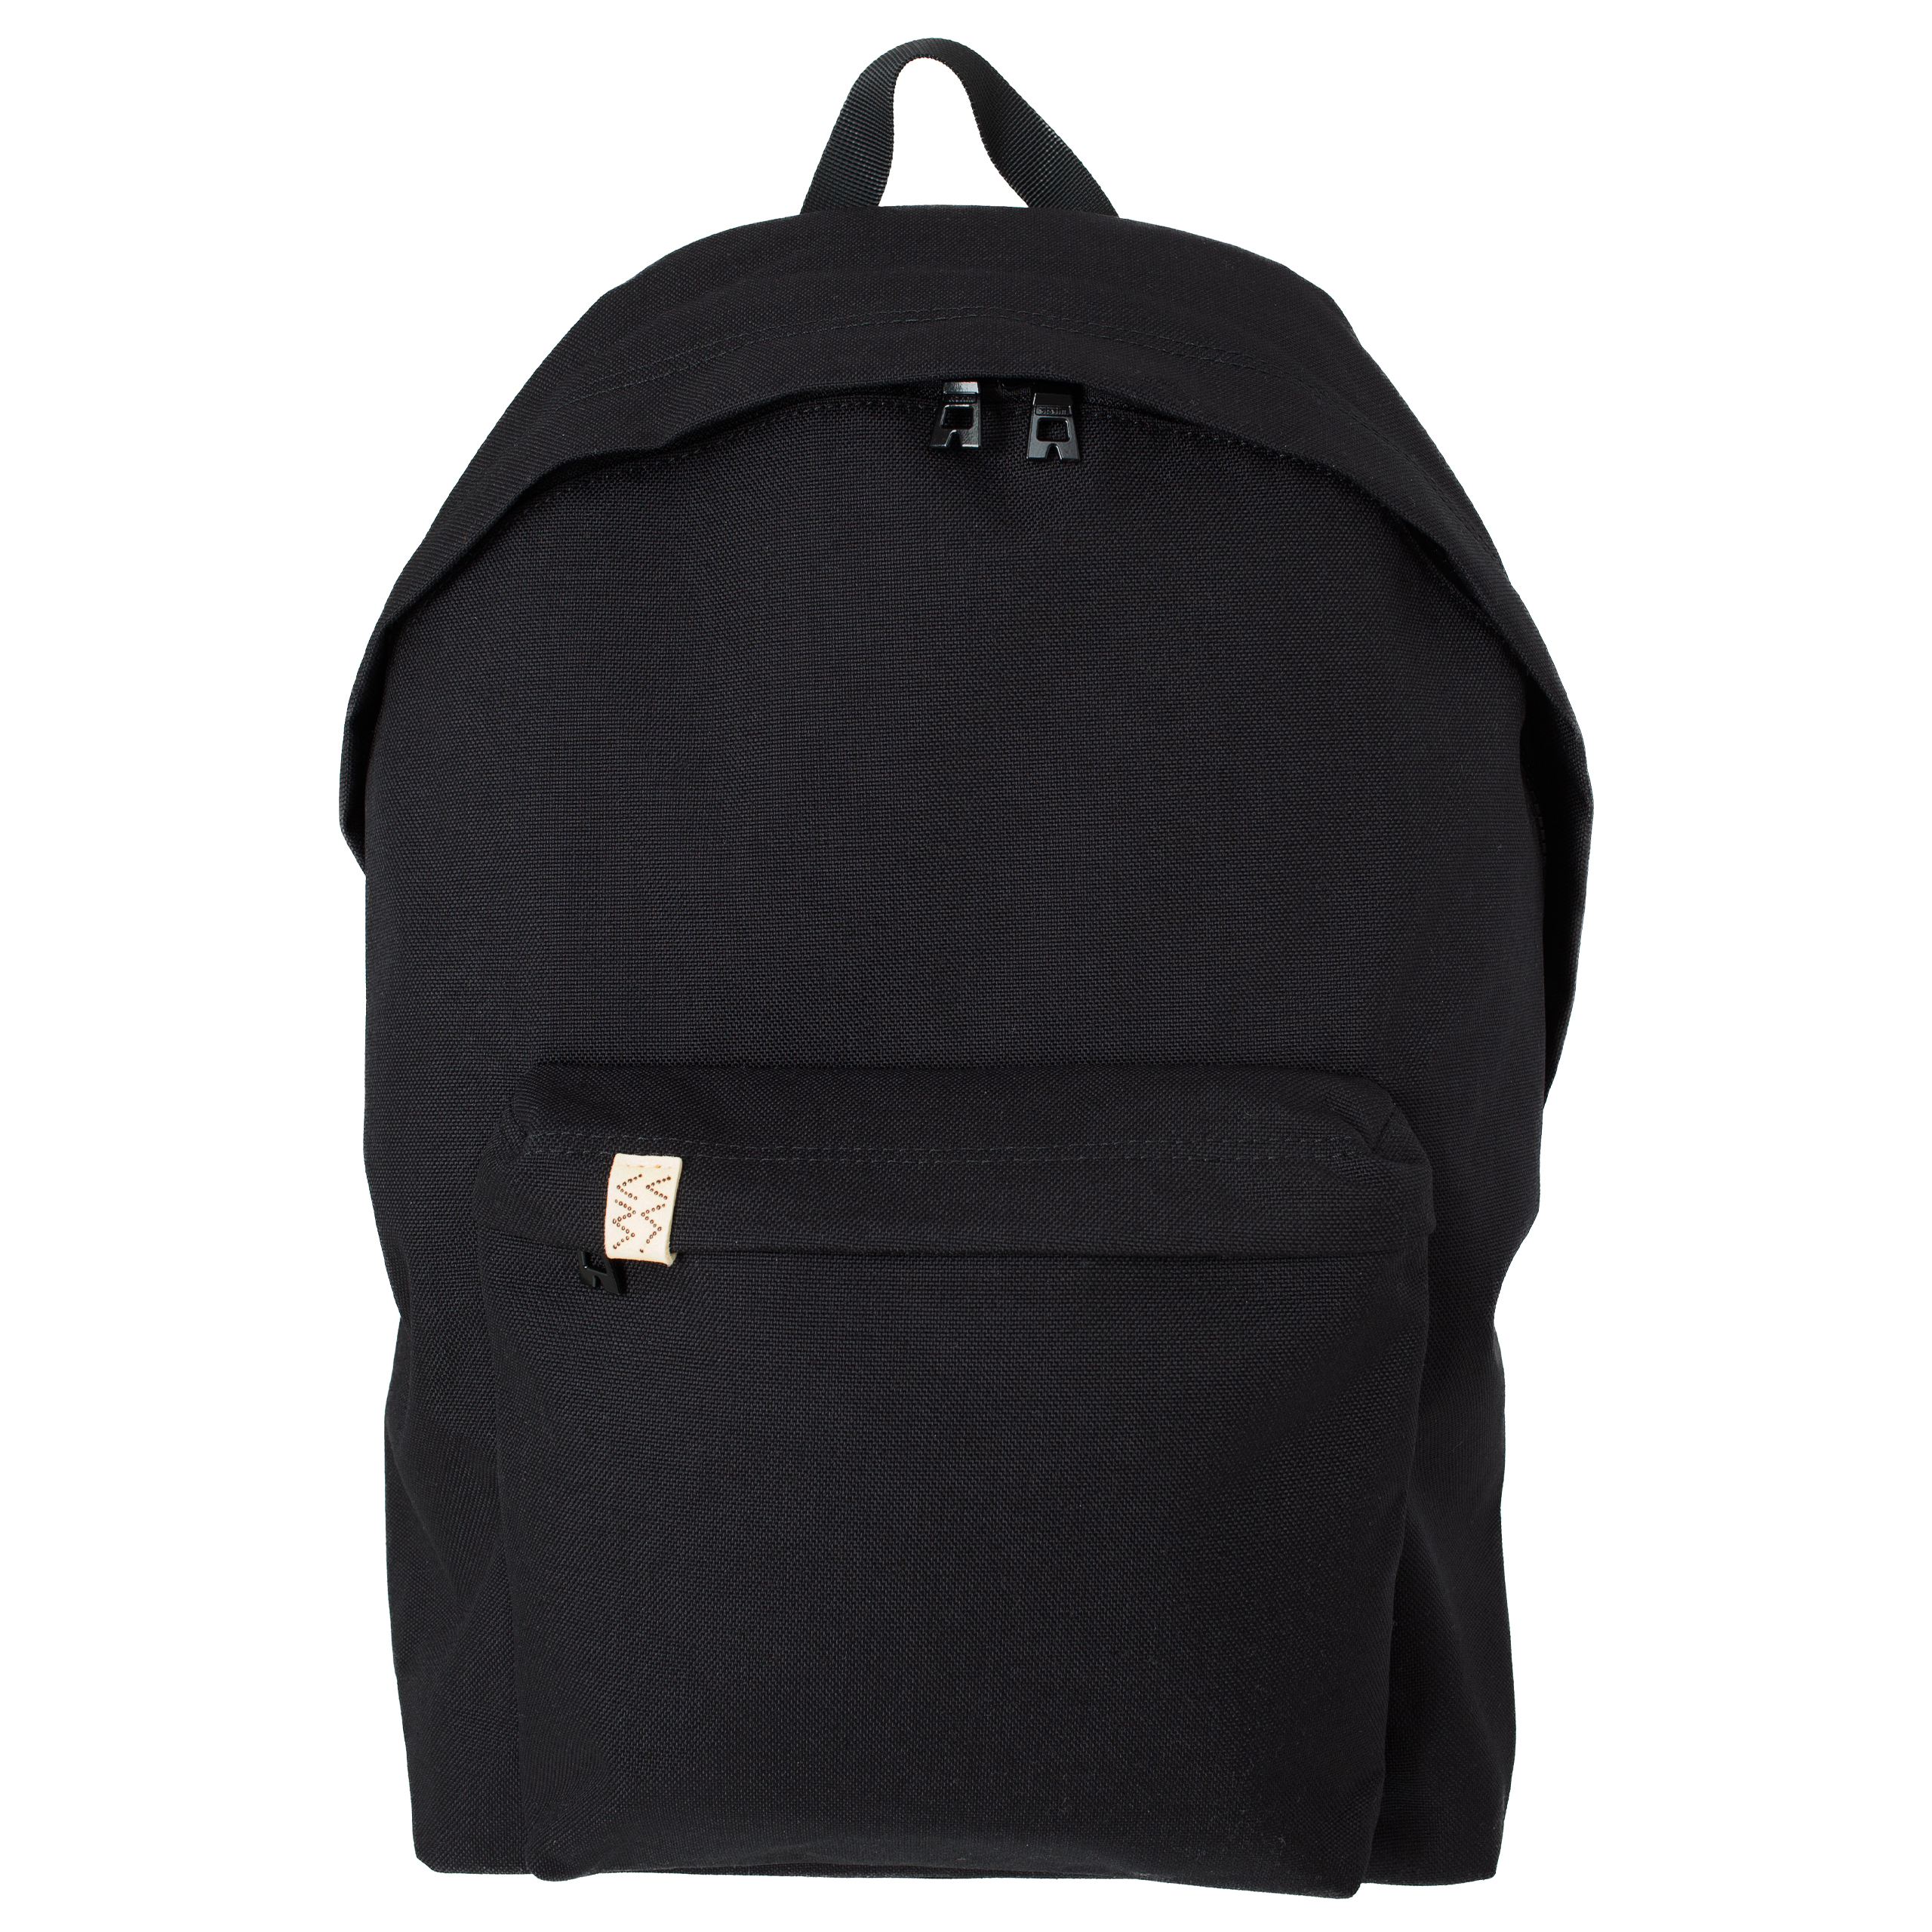 Черный рюкзак 22L visvim 0123103003030/BLACK, размер One Size 0123103003030/BLACK - фото 1